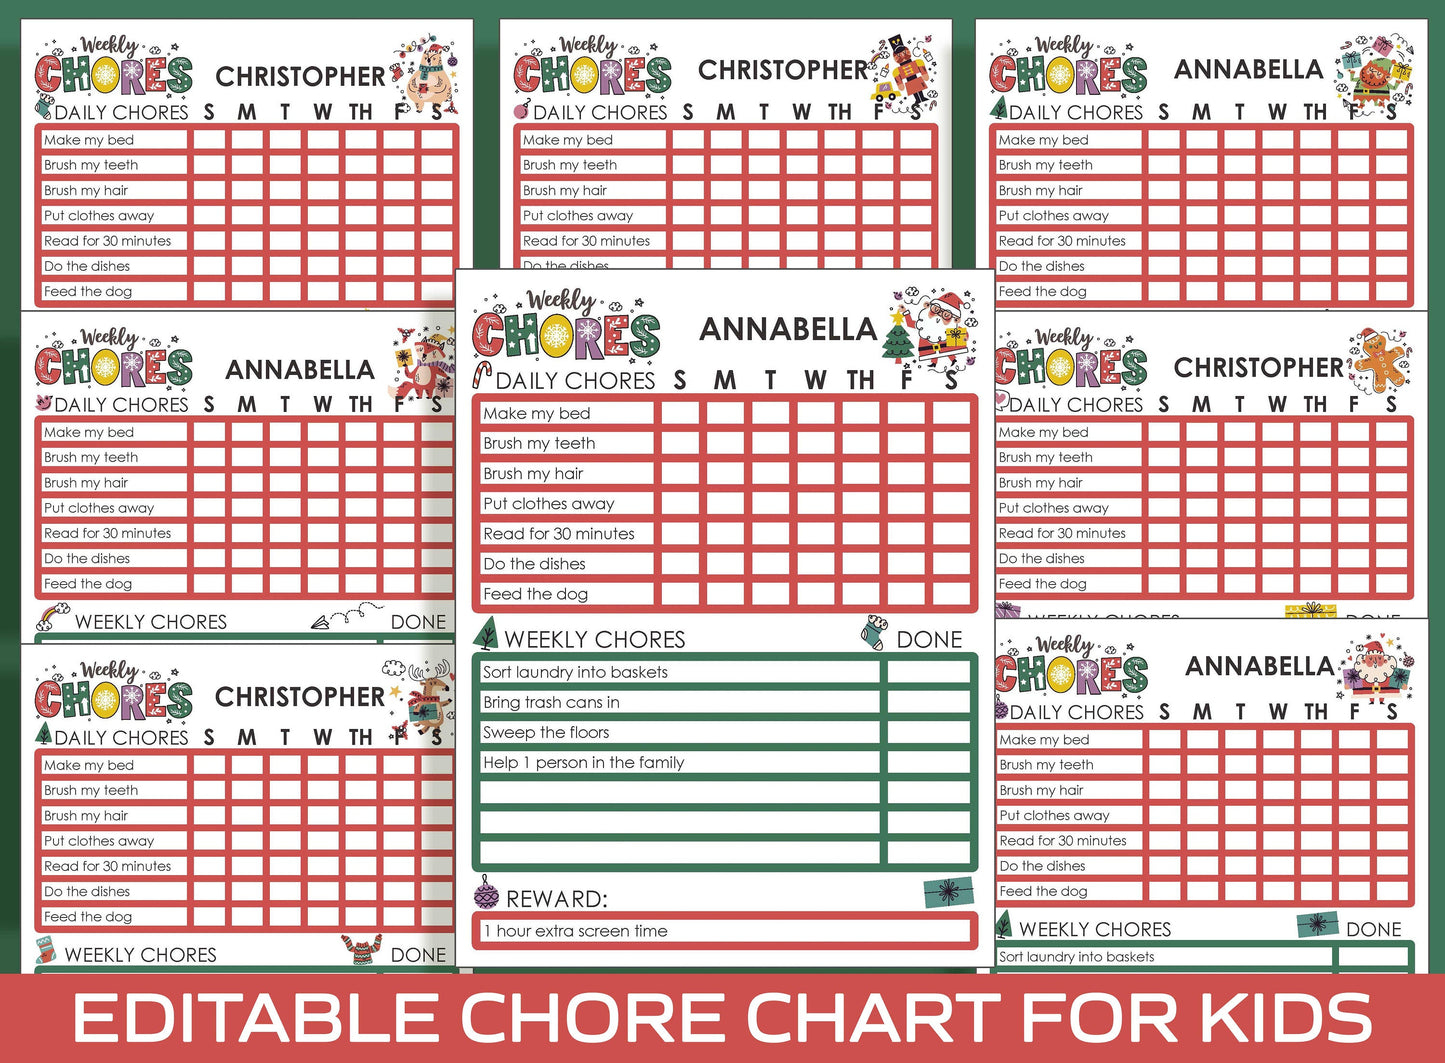 Chore Chart for Kids, Merry Christmas, Printable/Editable Chore Chart for Kids, Responsibility, Boys/Girls To Do List, Reward Chart/Routine